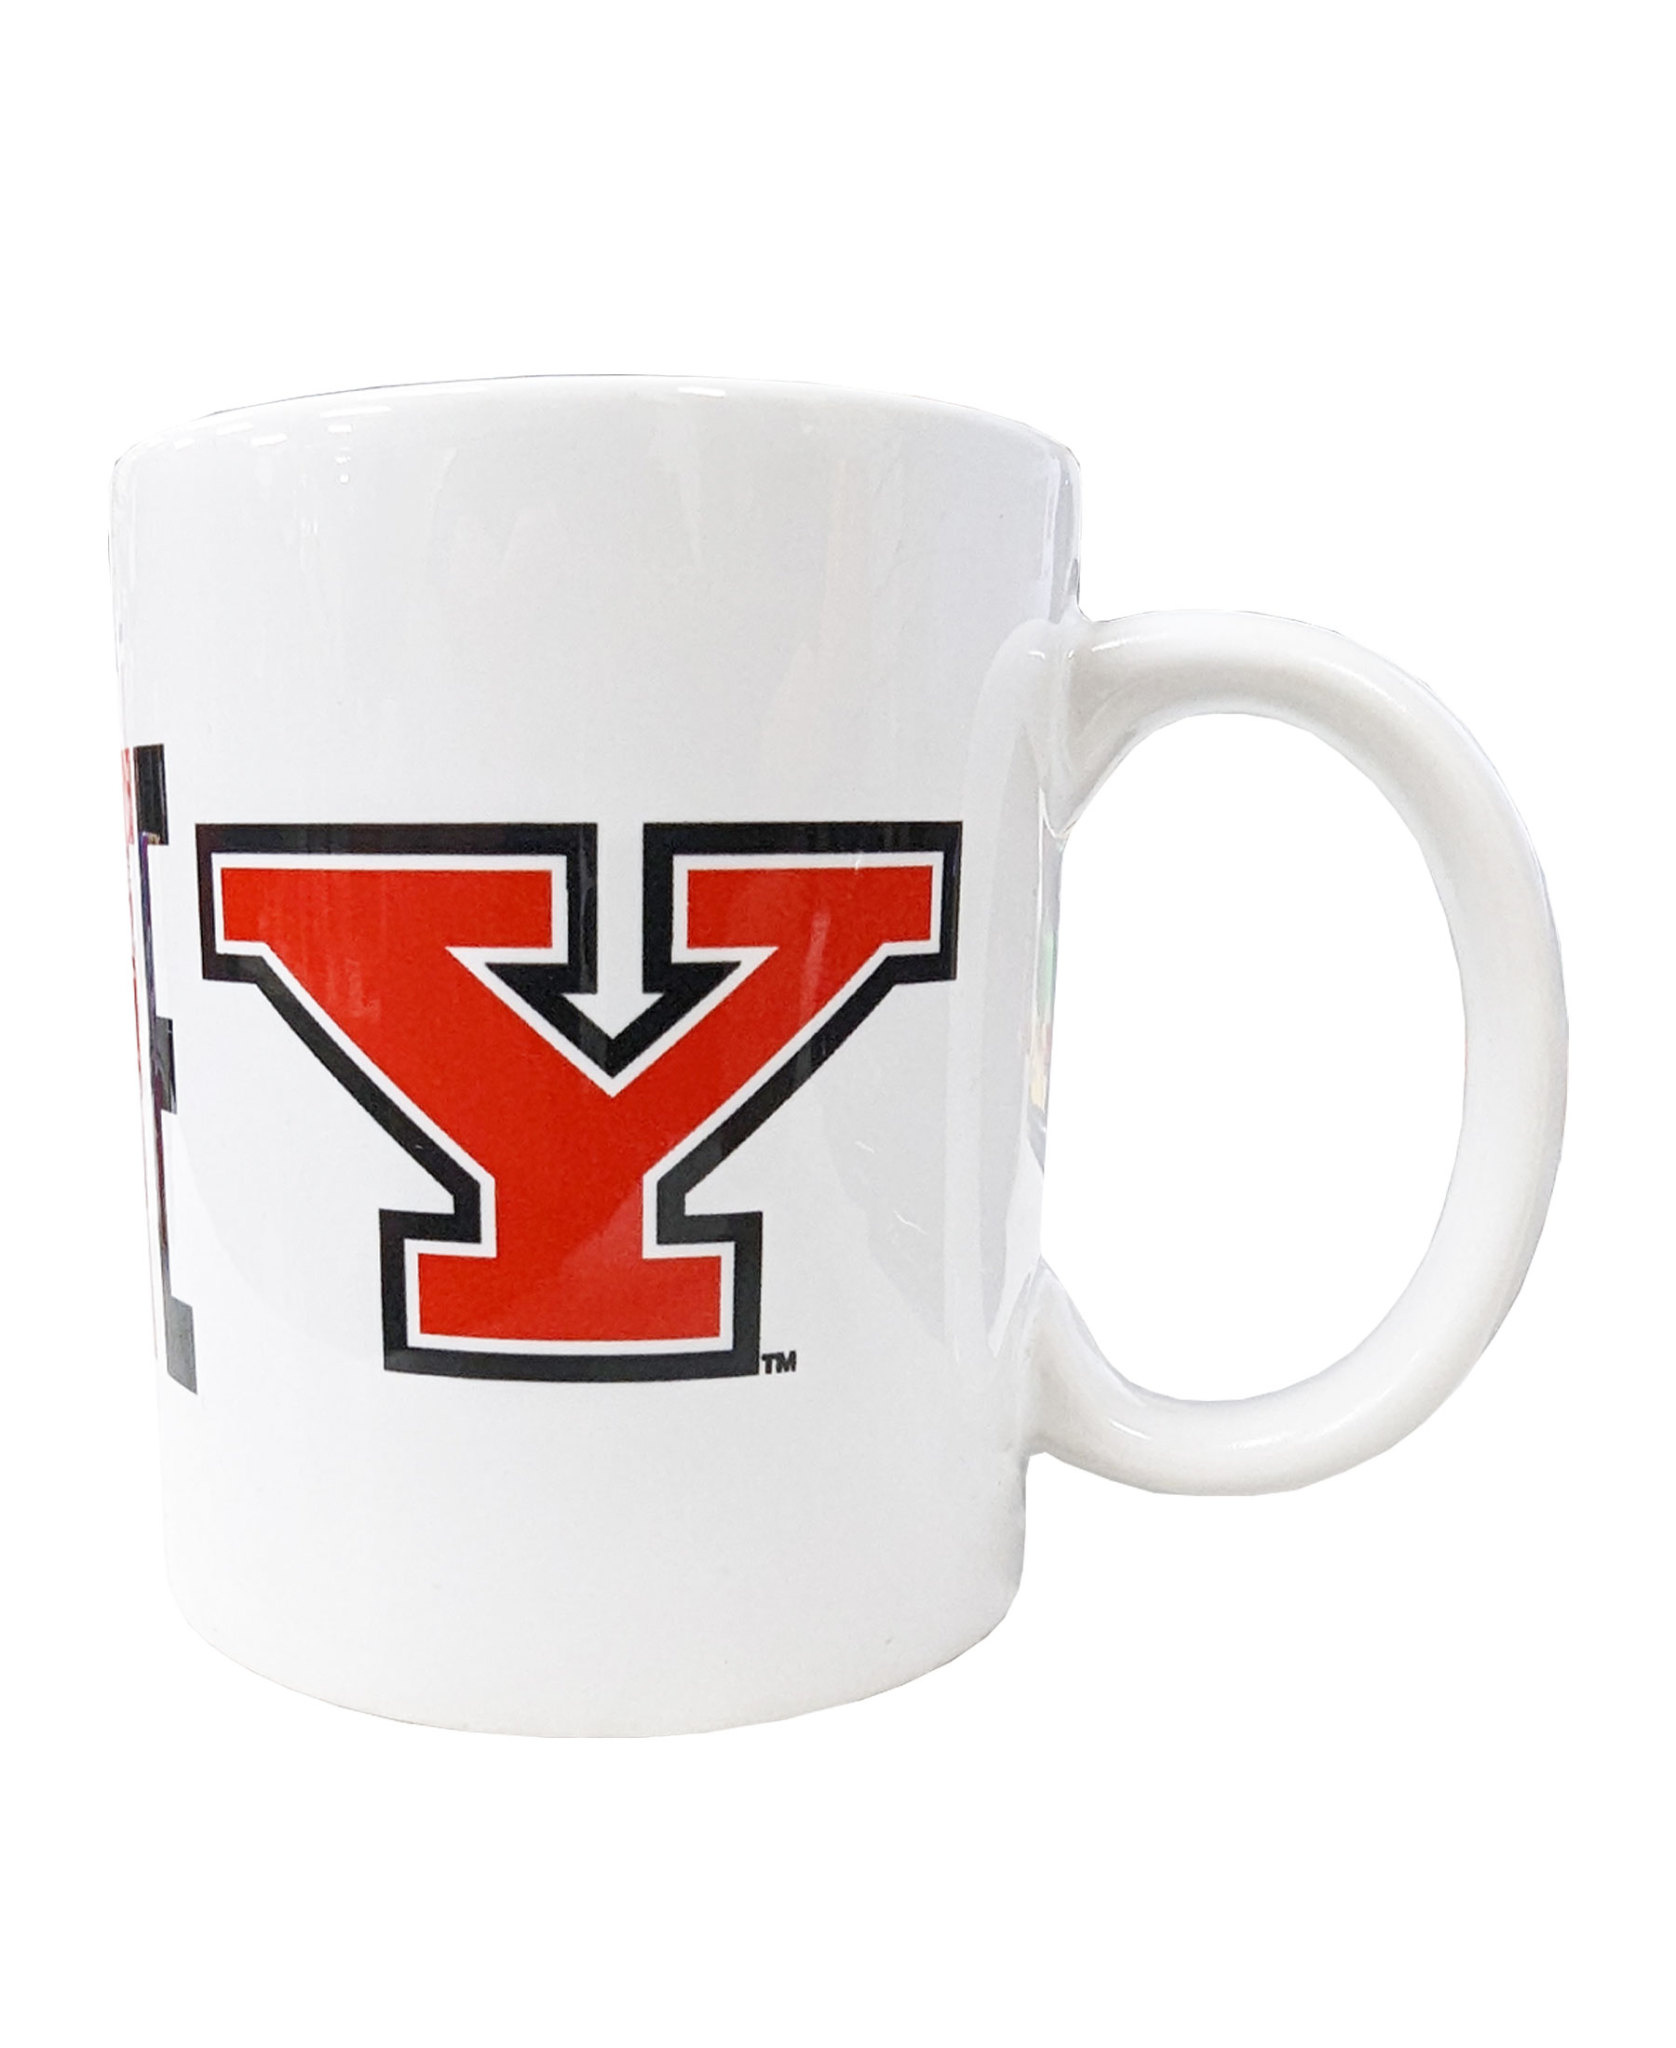 2 Vintage Ohio State University Coffee Cups Mugs /WBNS Voice 